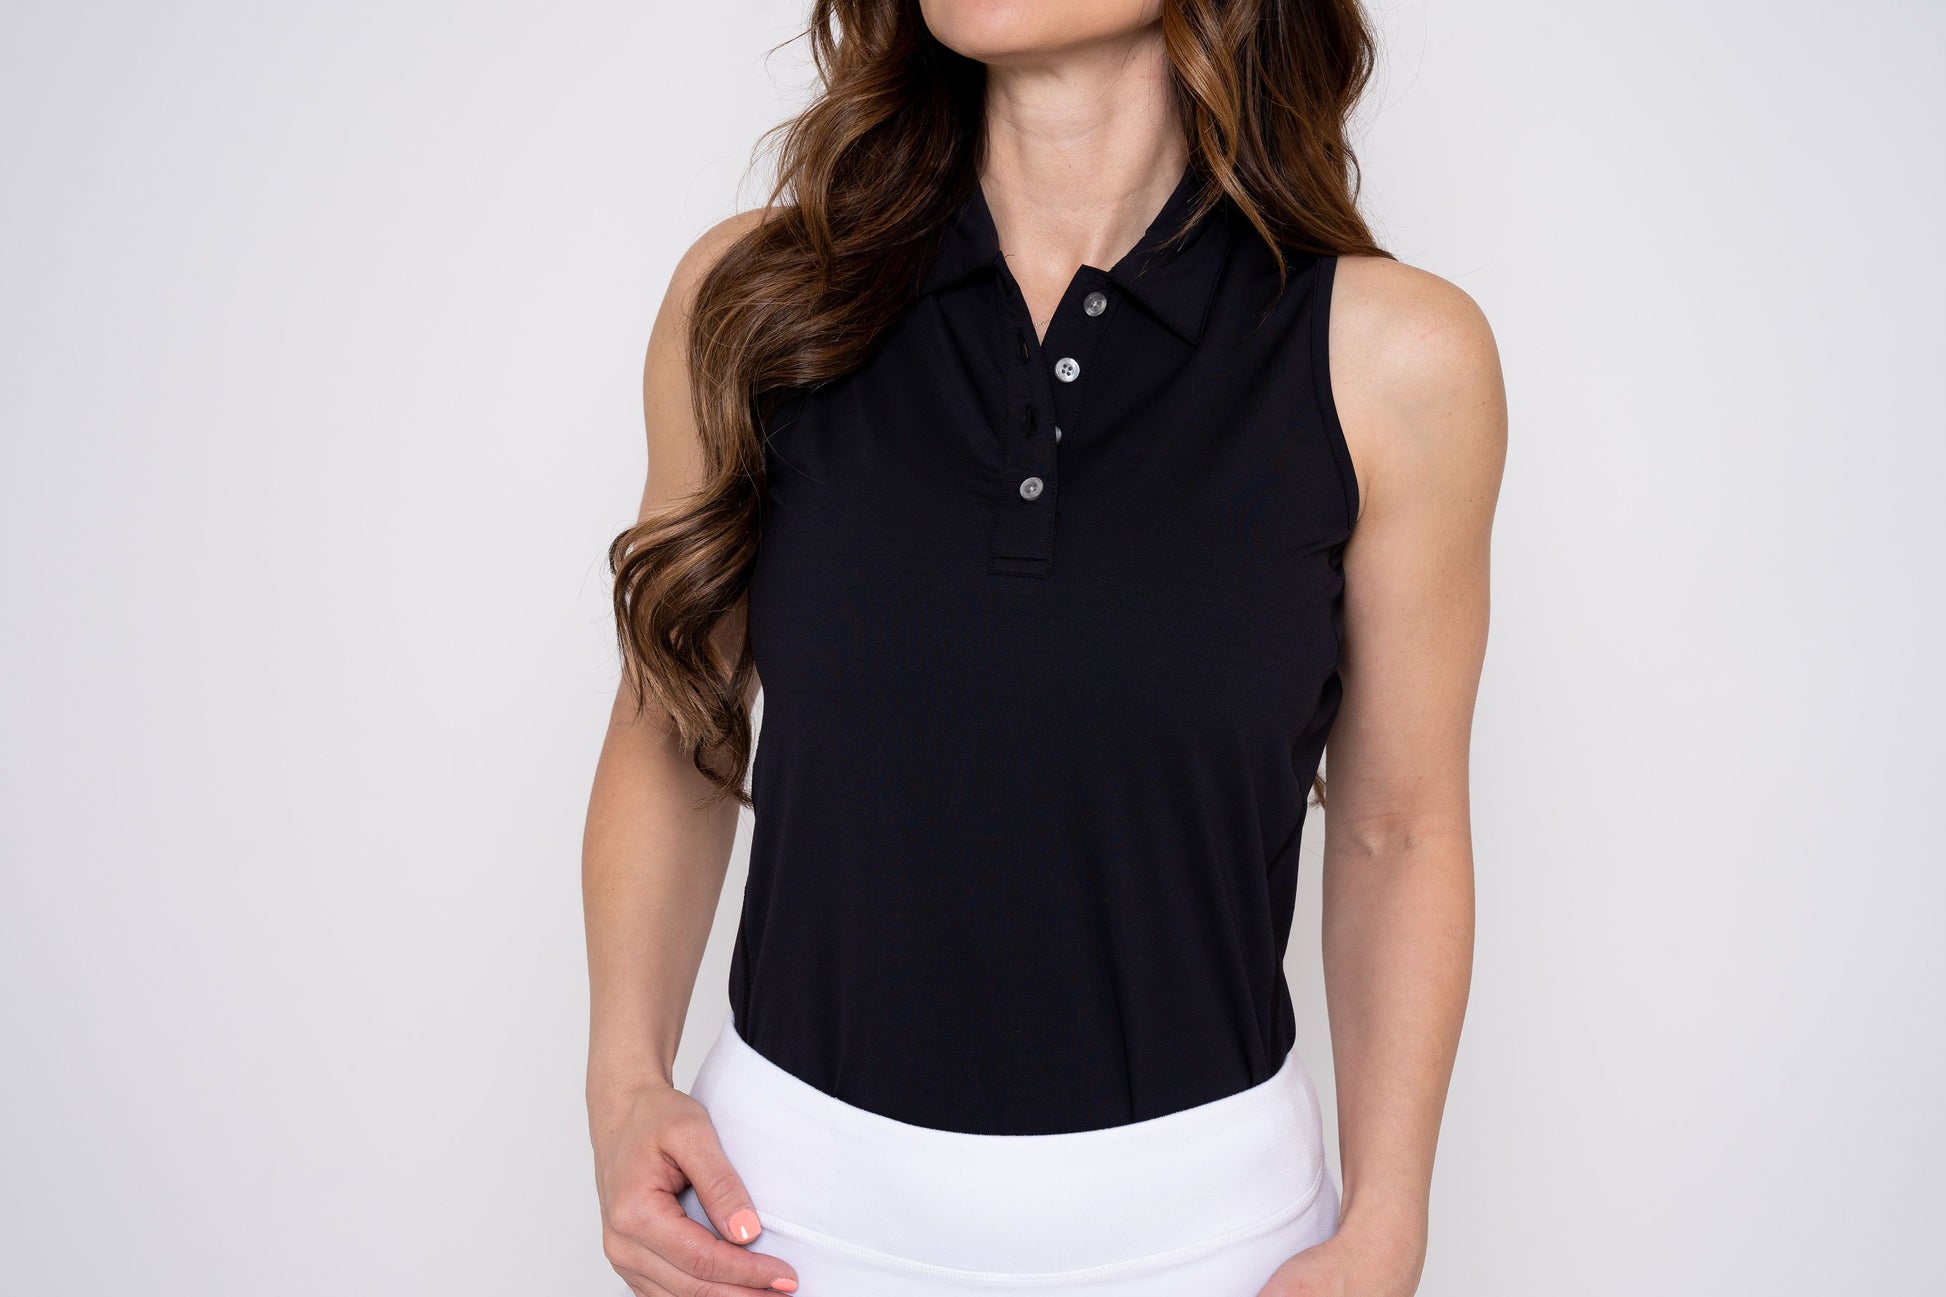 Sleeveless Golf Shirt - Black Women's Golf Shirt Taylor Jordan Apparel Black X-Small 